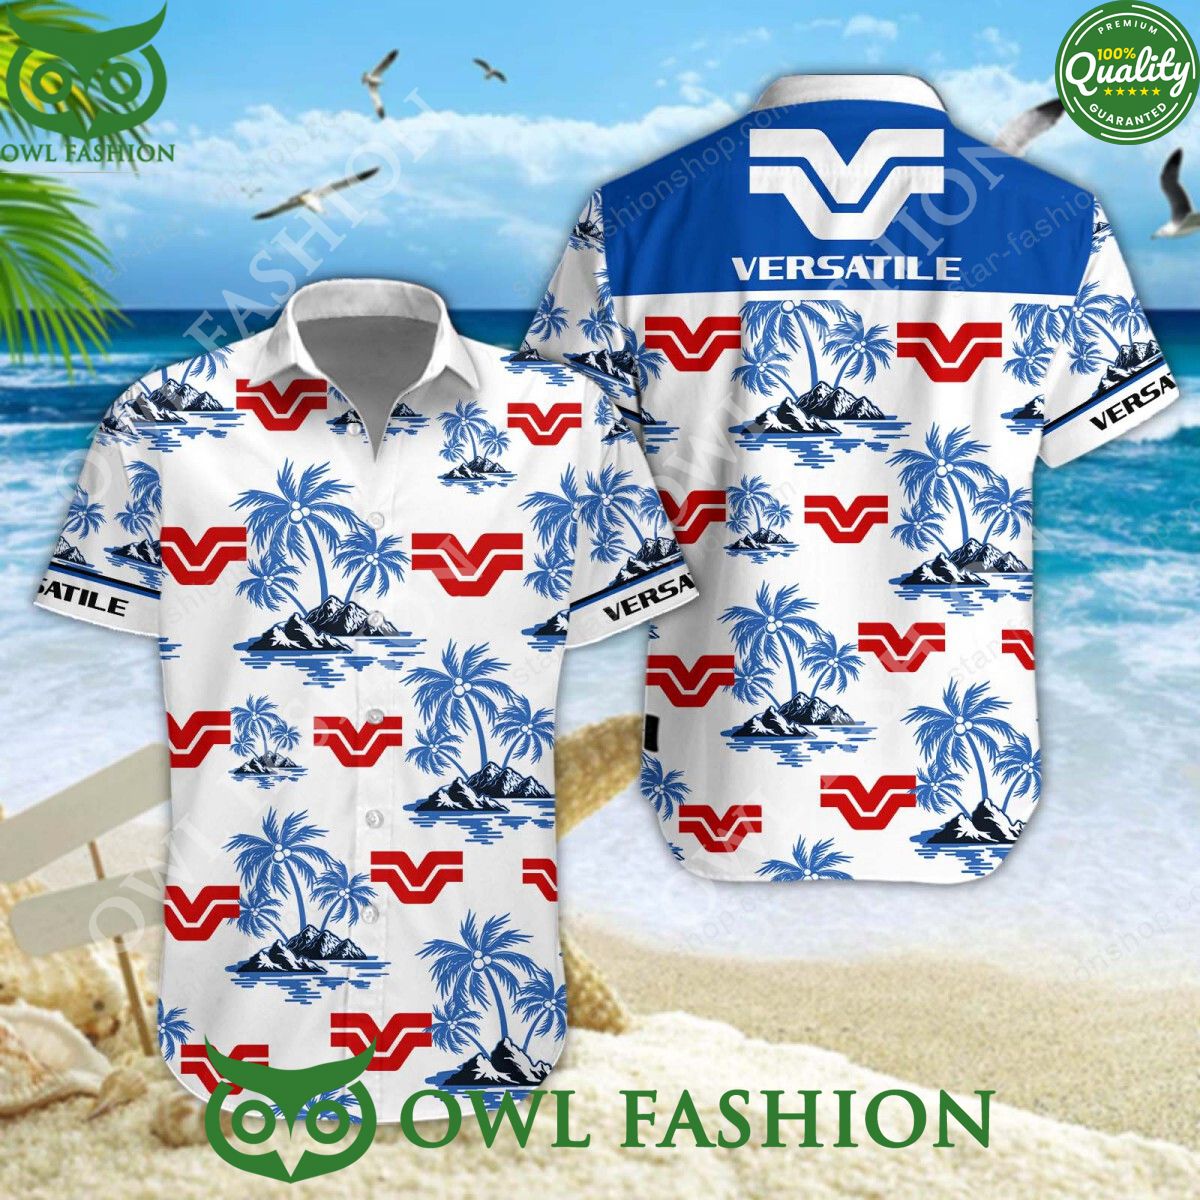 Versatile North American manufacturer Hawaiian Shirt and Short